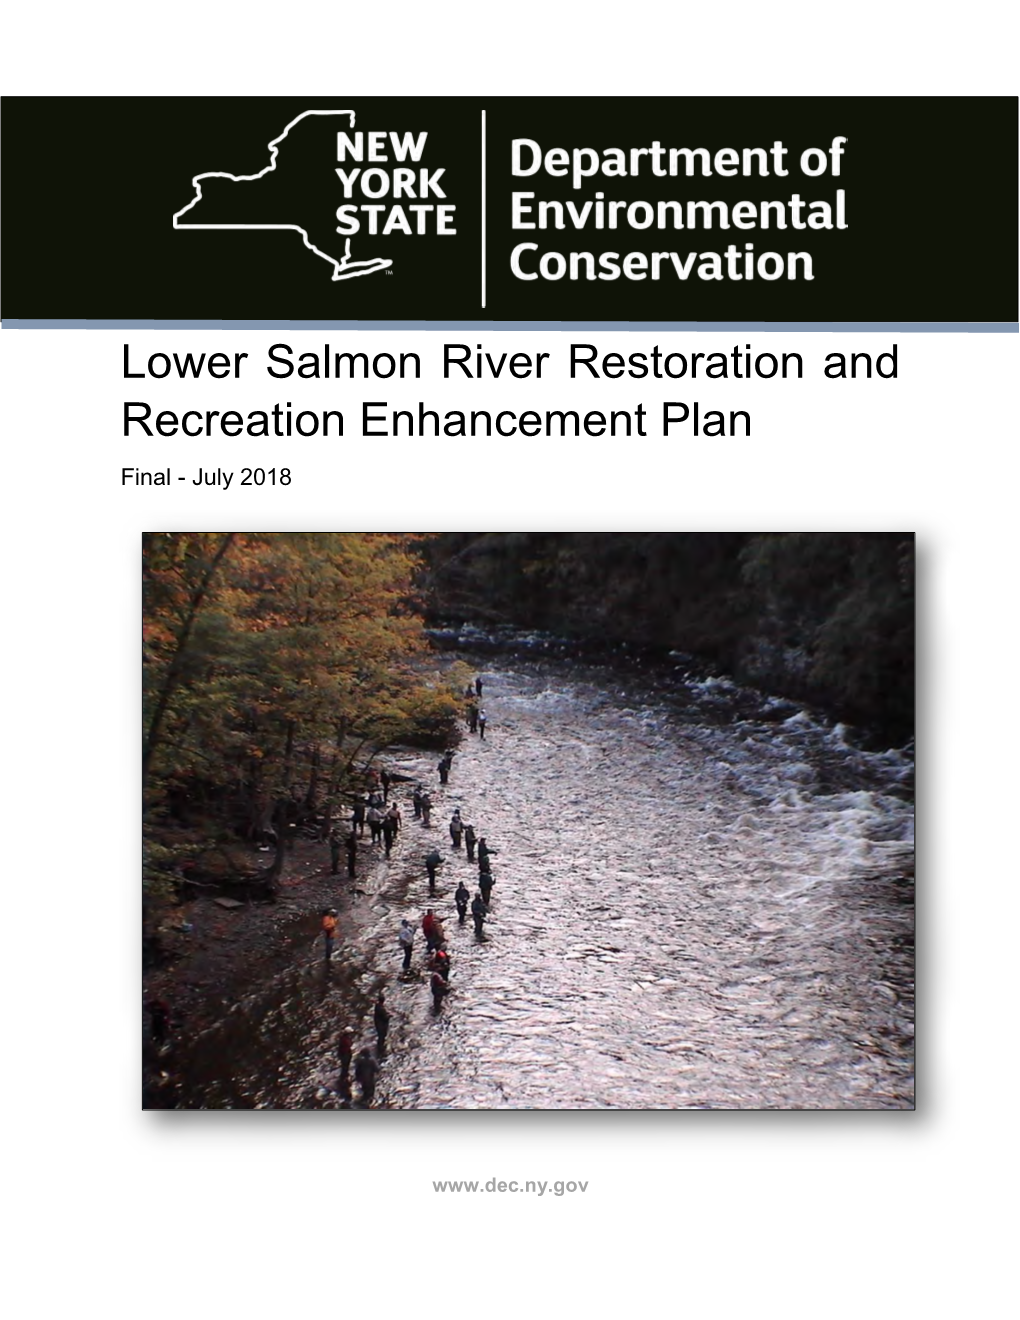 Lower Salmon River Restoration and Recreation Enhancement Plan Final - July 2018